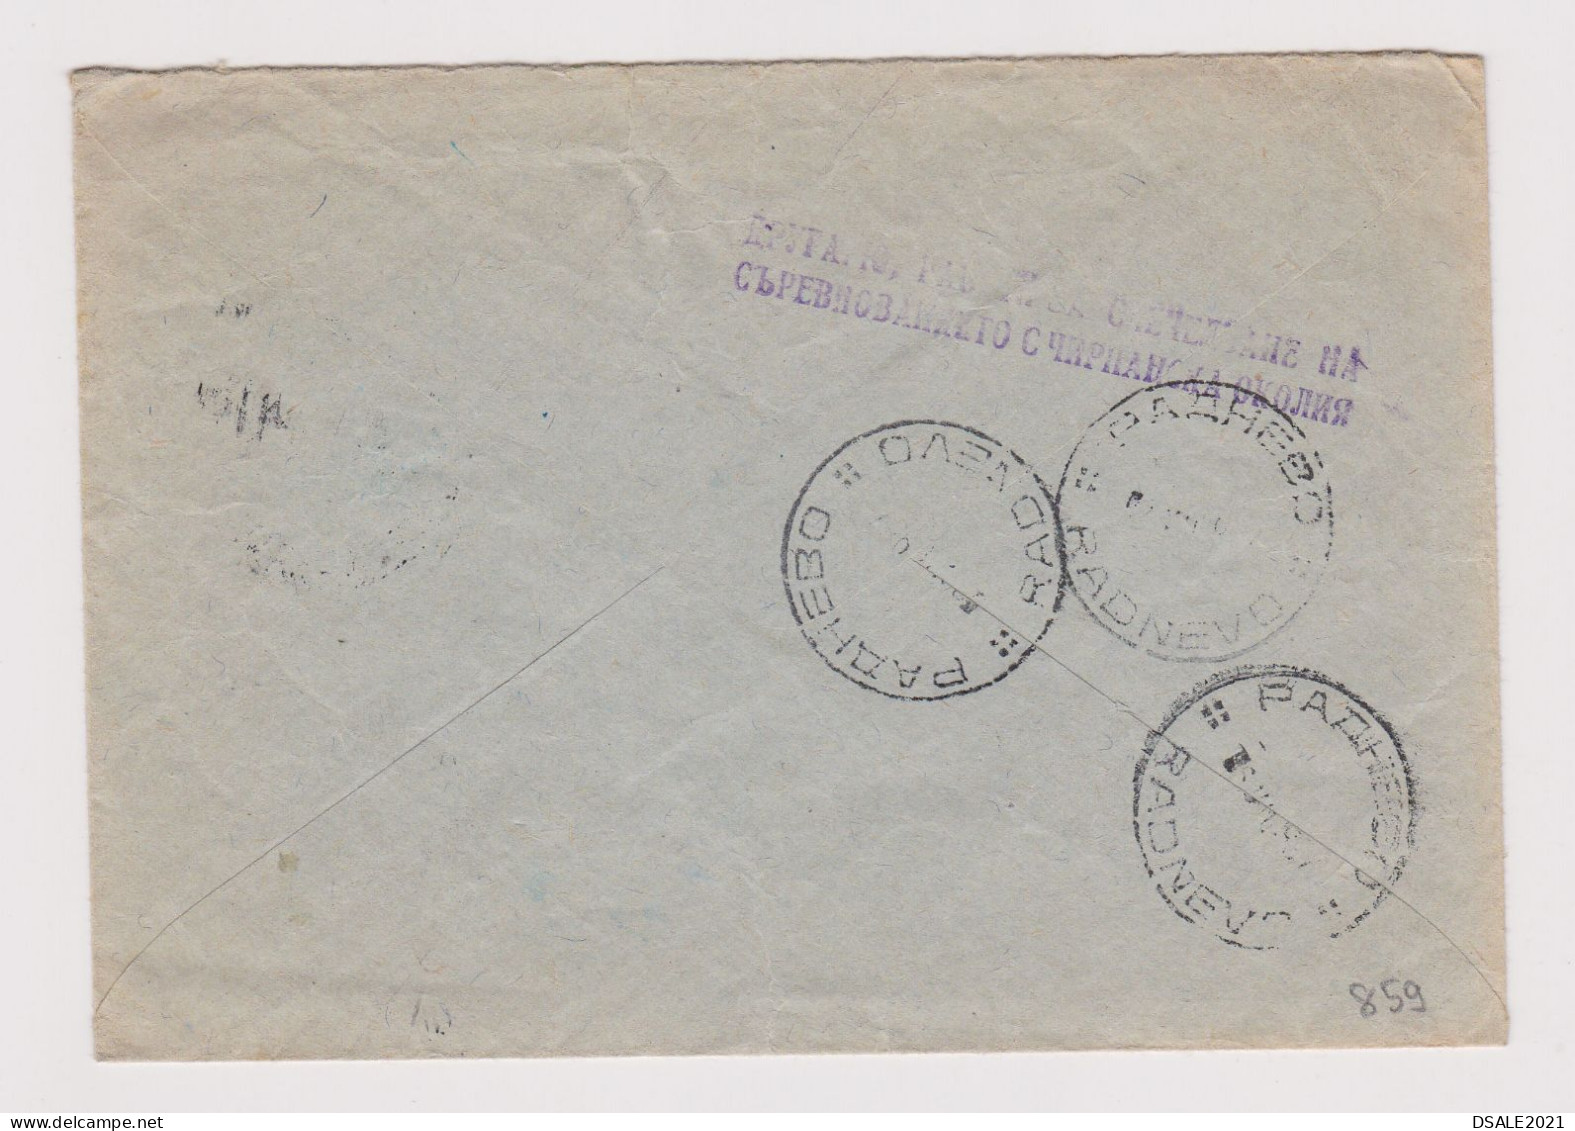 Bulgaria Bulgarie Bulgarian Postal Stationery Cover, 1950s Sent Via Railway TPO Zug Bahnpost (BURGAS-SOFIA) /859 - Covers